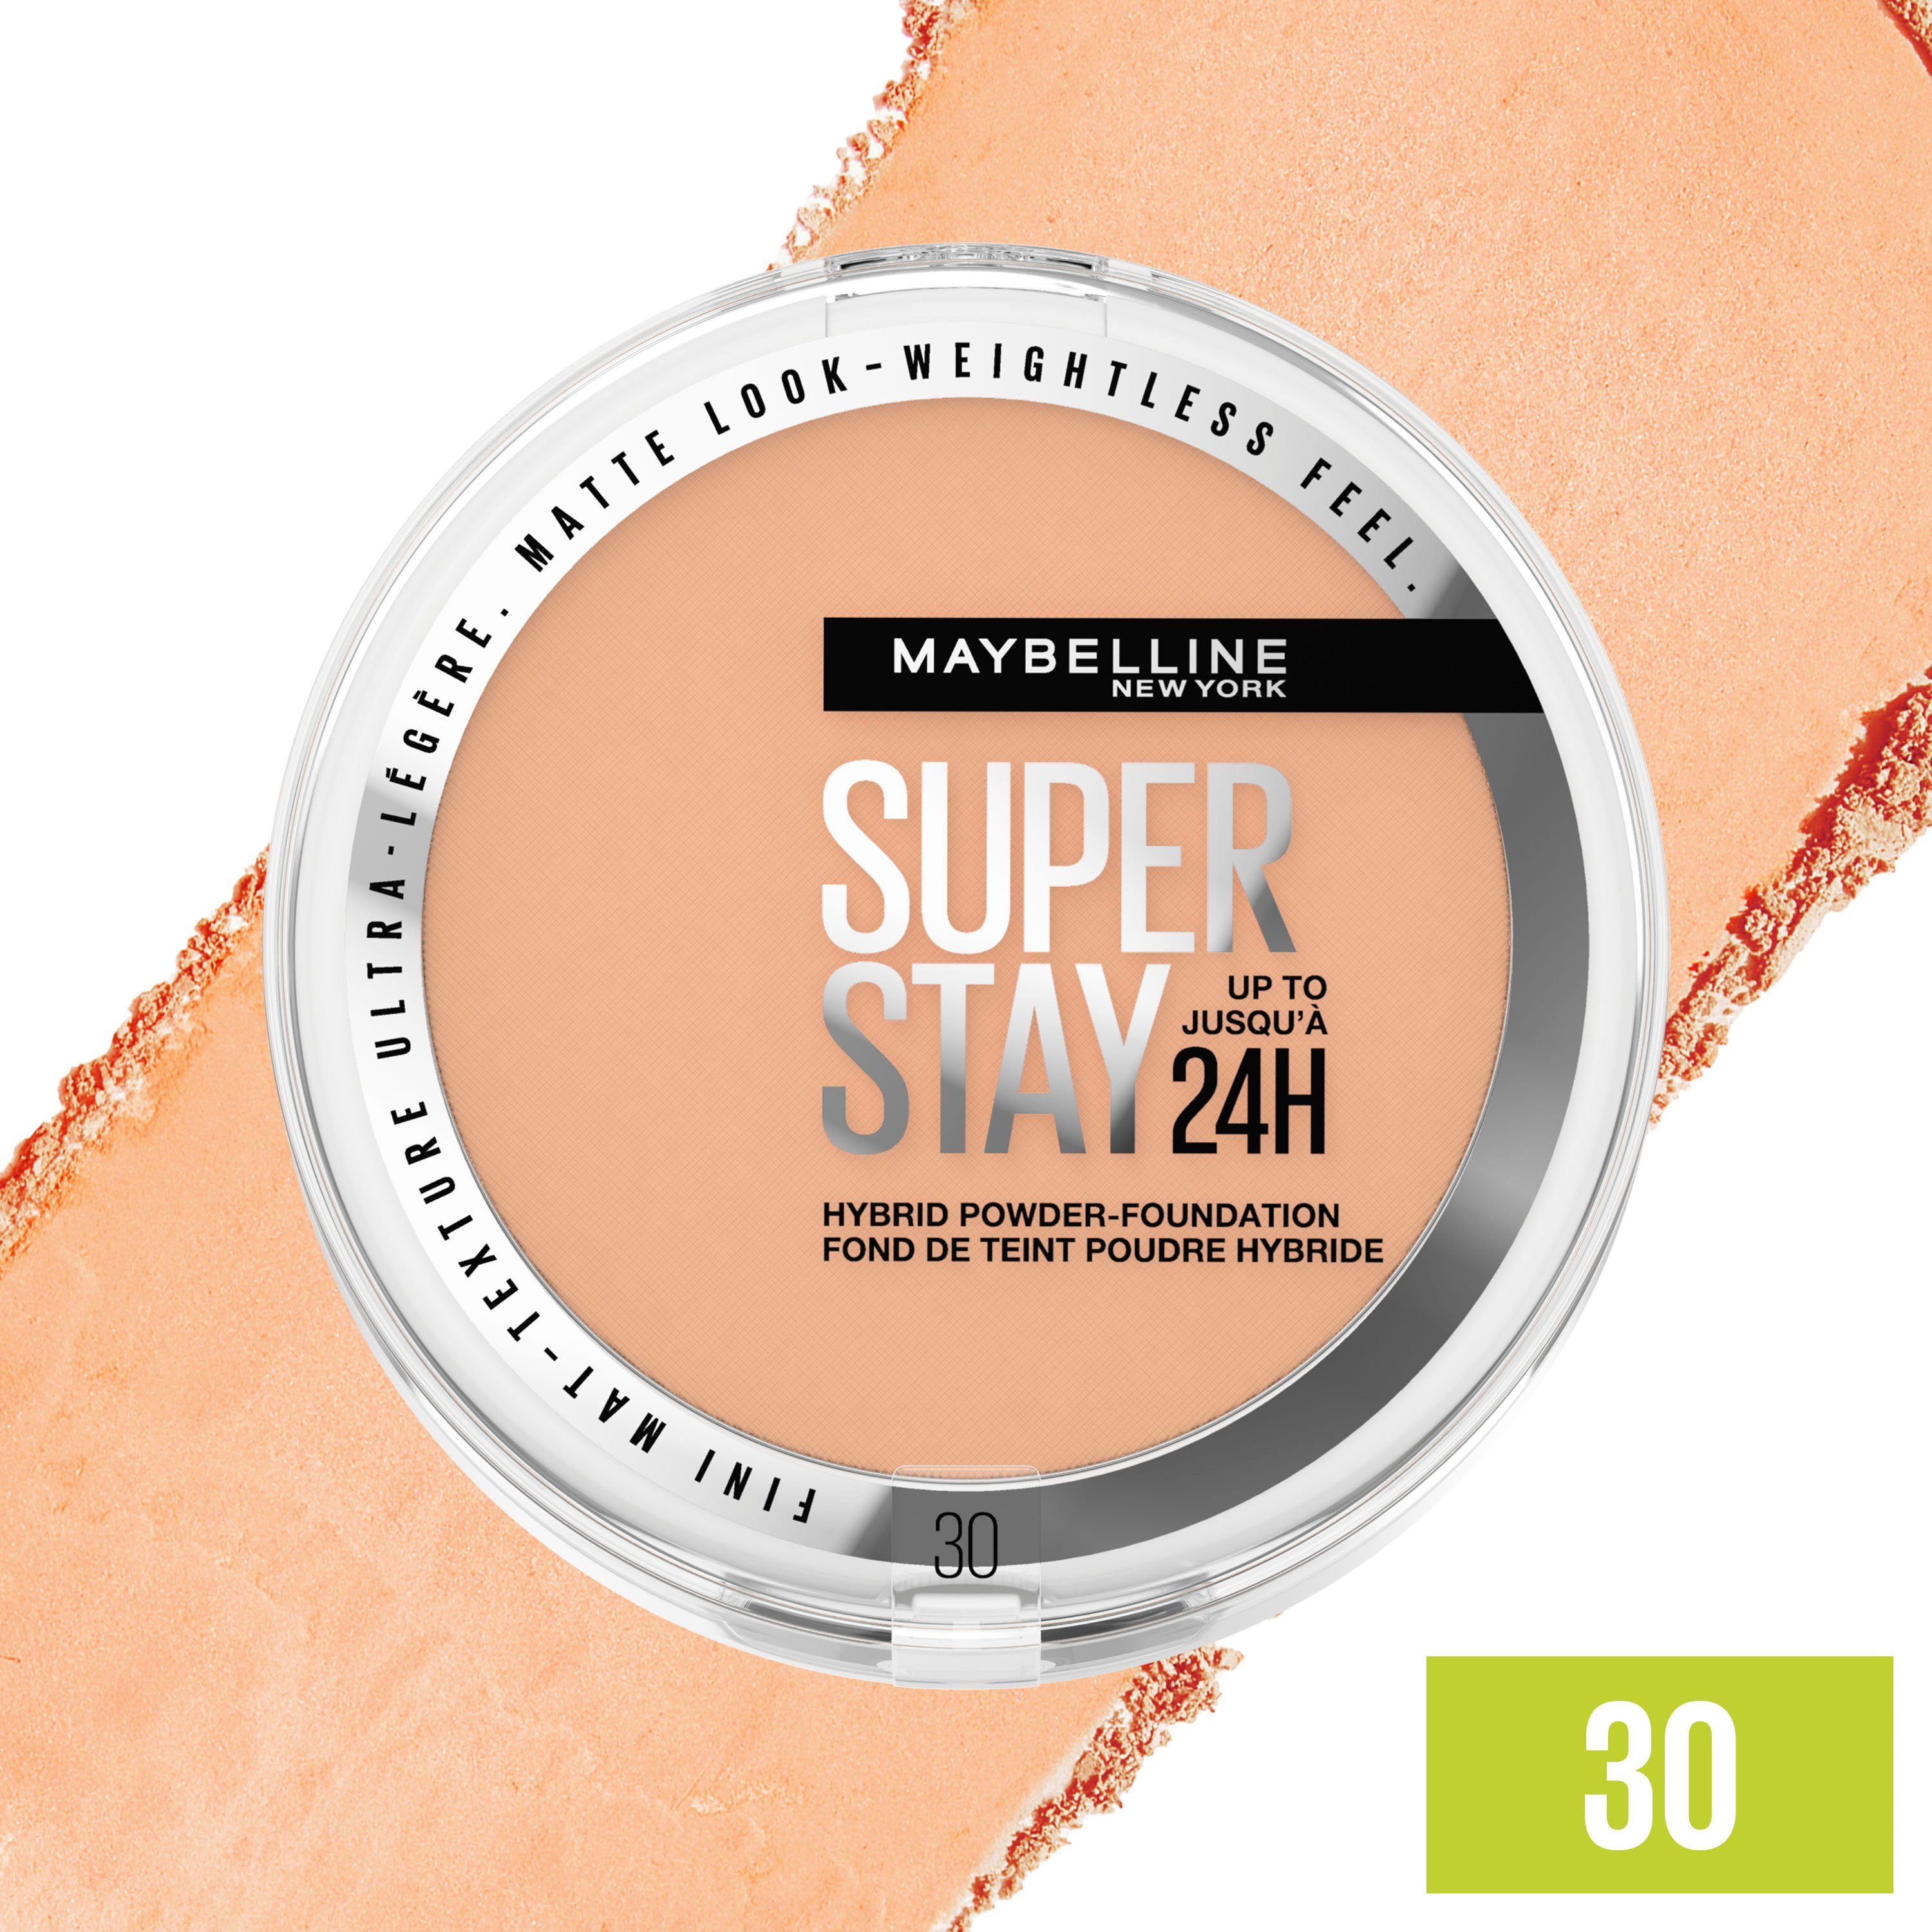 New MAYBELLINE Stay Foundation Super Puder Maybelline NEW YORK Make-Up York Hybrides